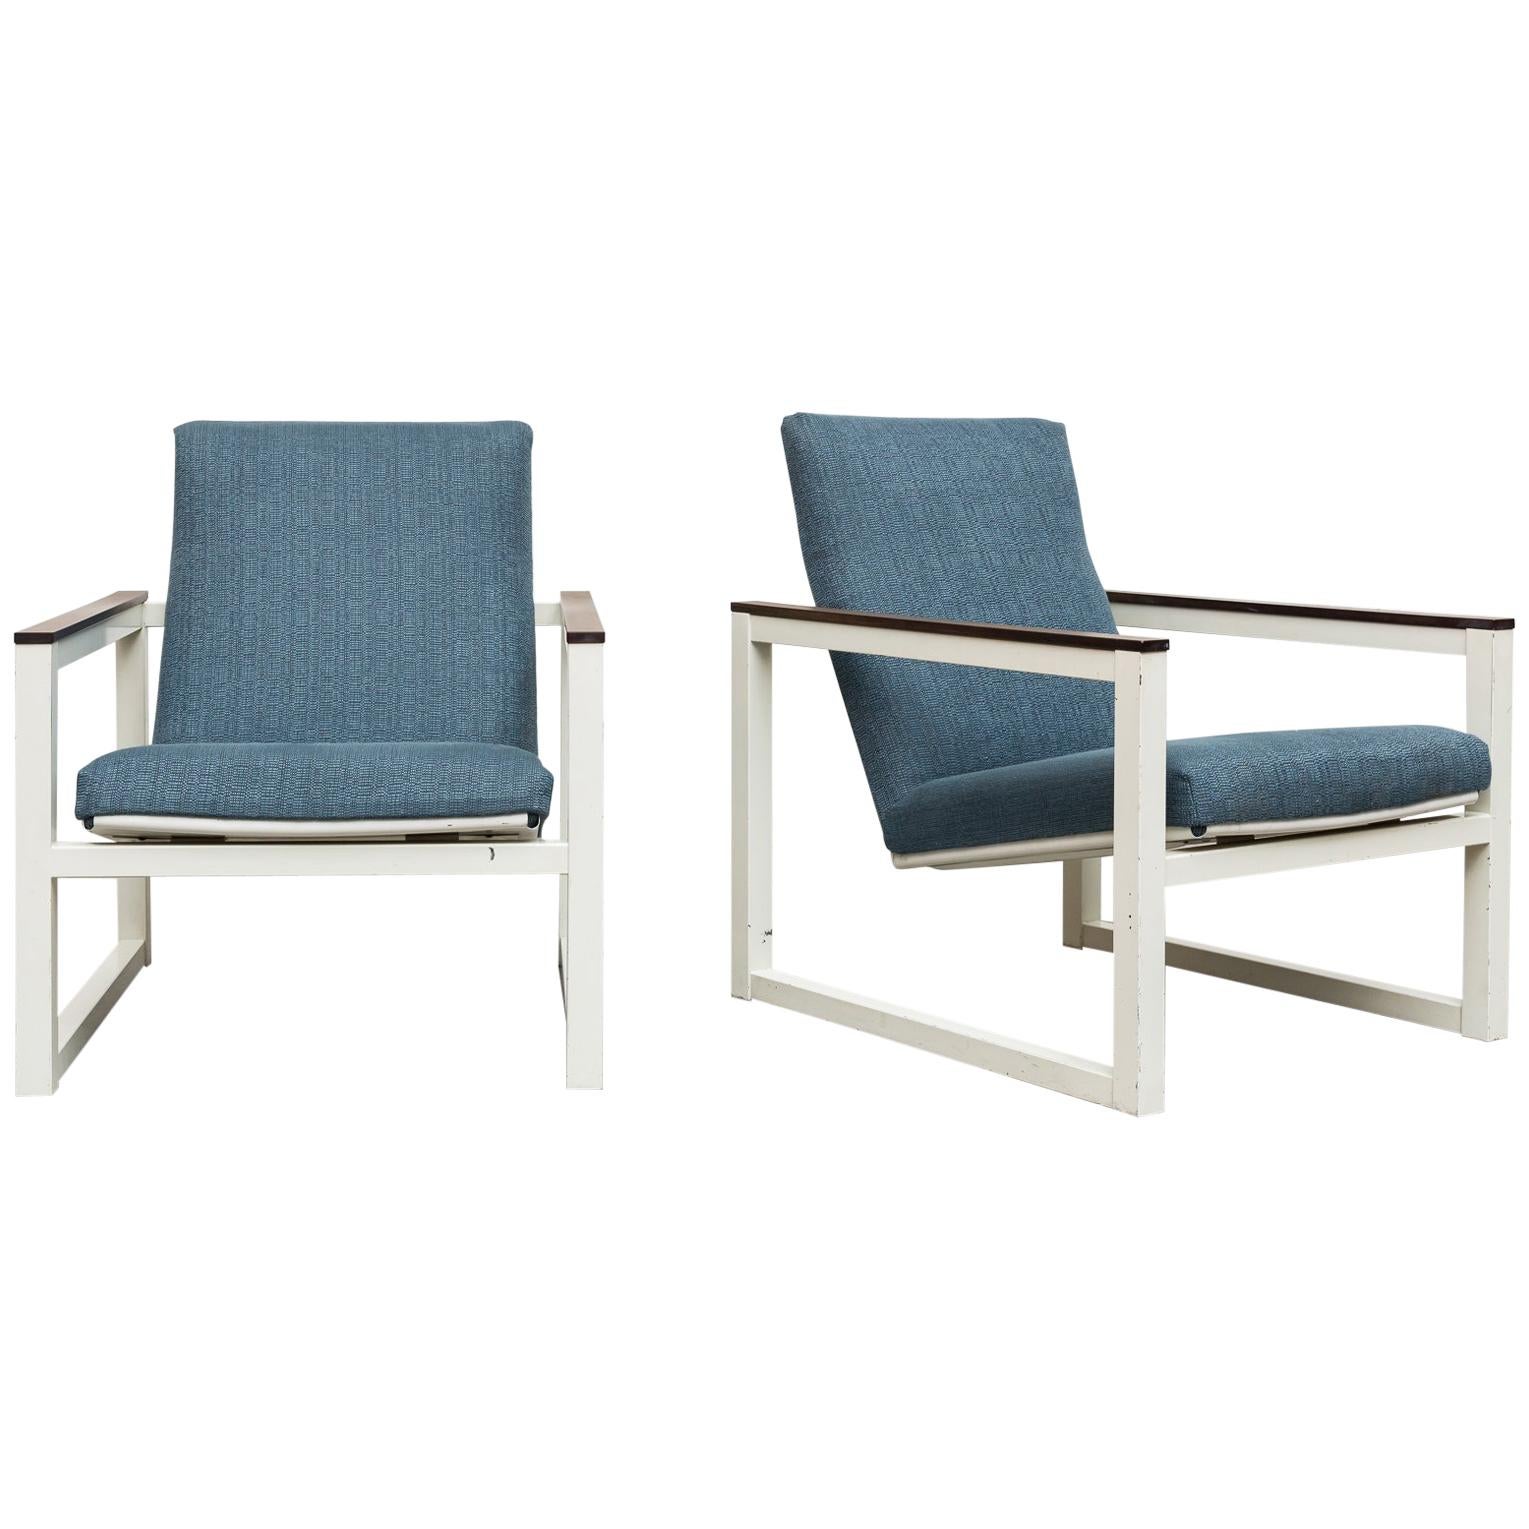 Pair of Kramer or Reijenga Cube Chairs